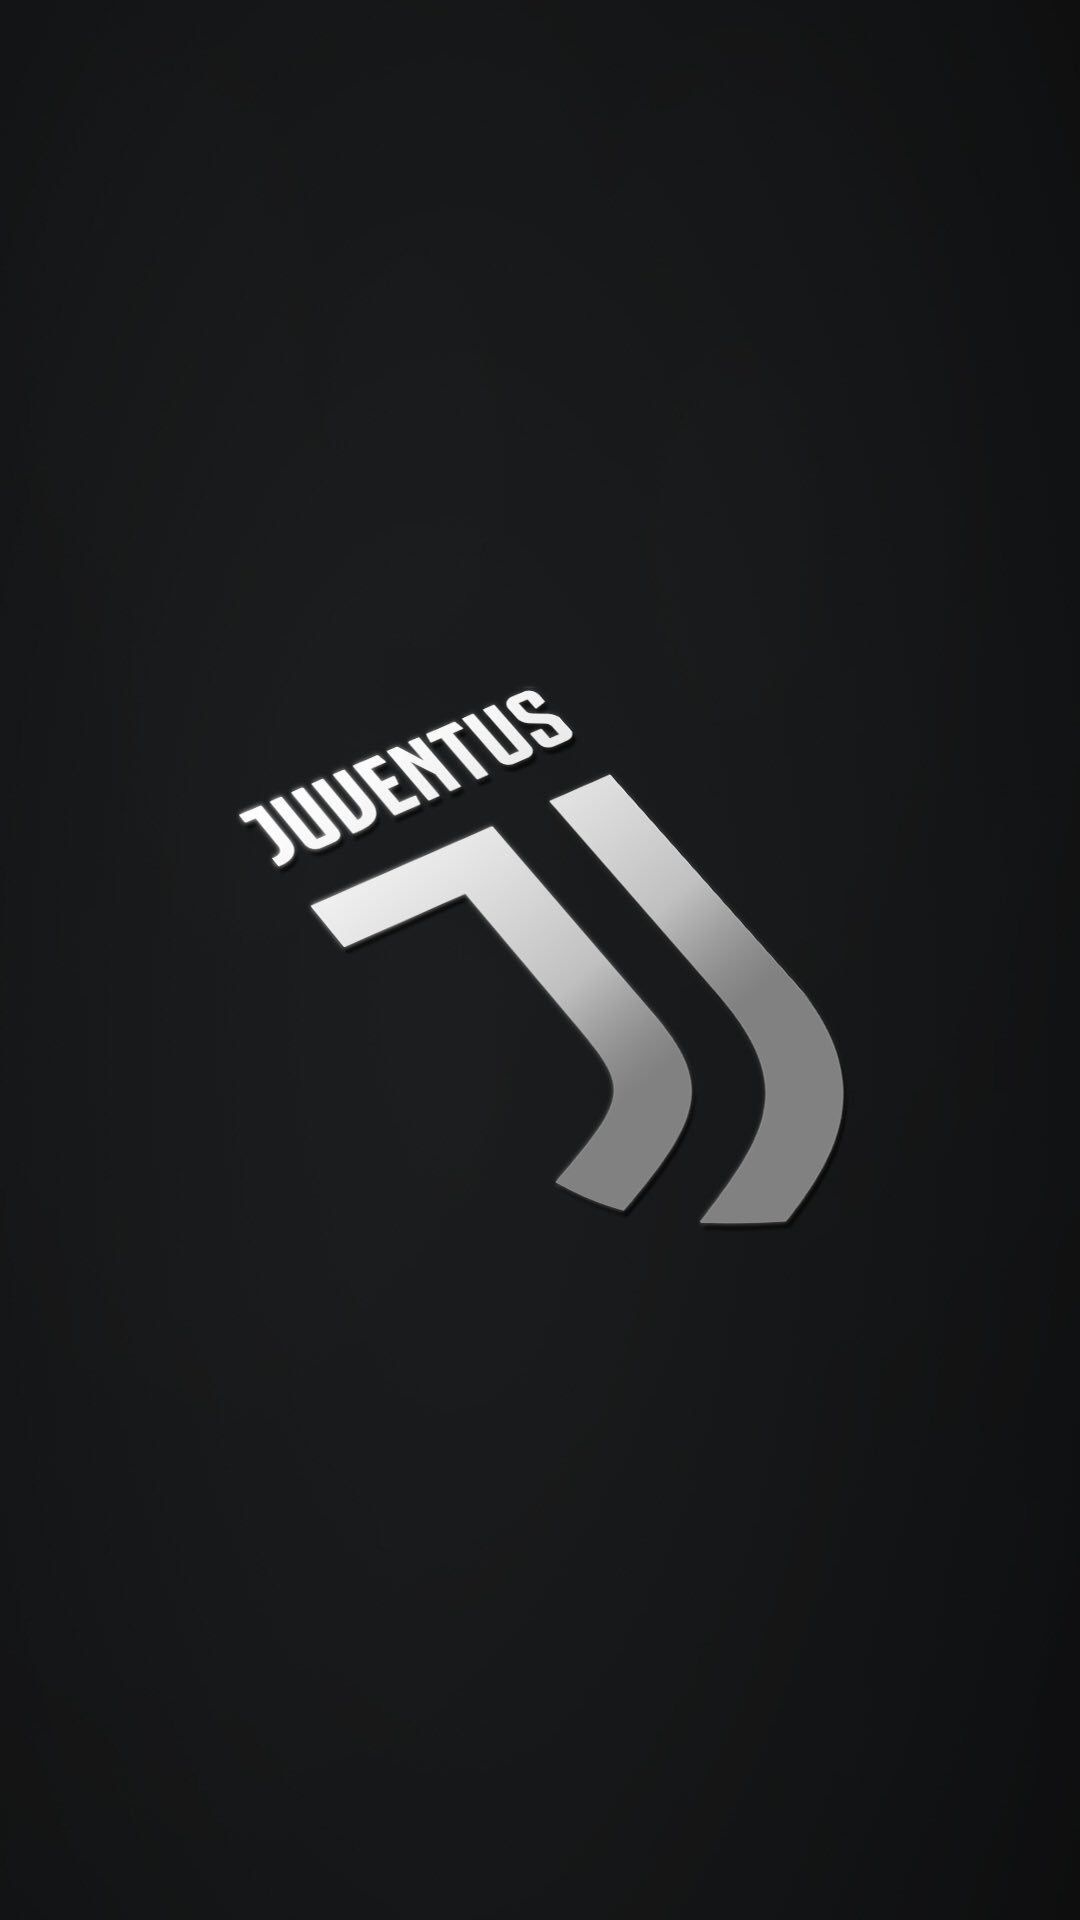 Juventus Logo, Famous football club, Bianconeri pride, Game imagery, 1080x1920 Full HD Handy